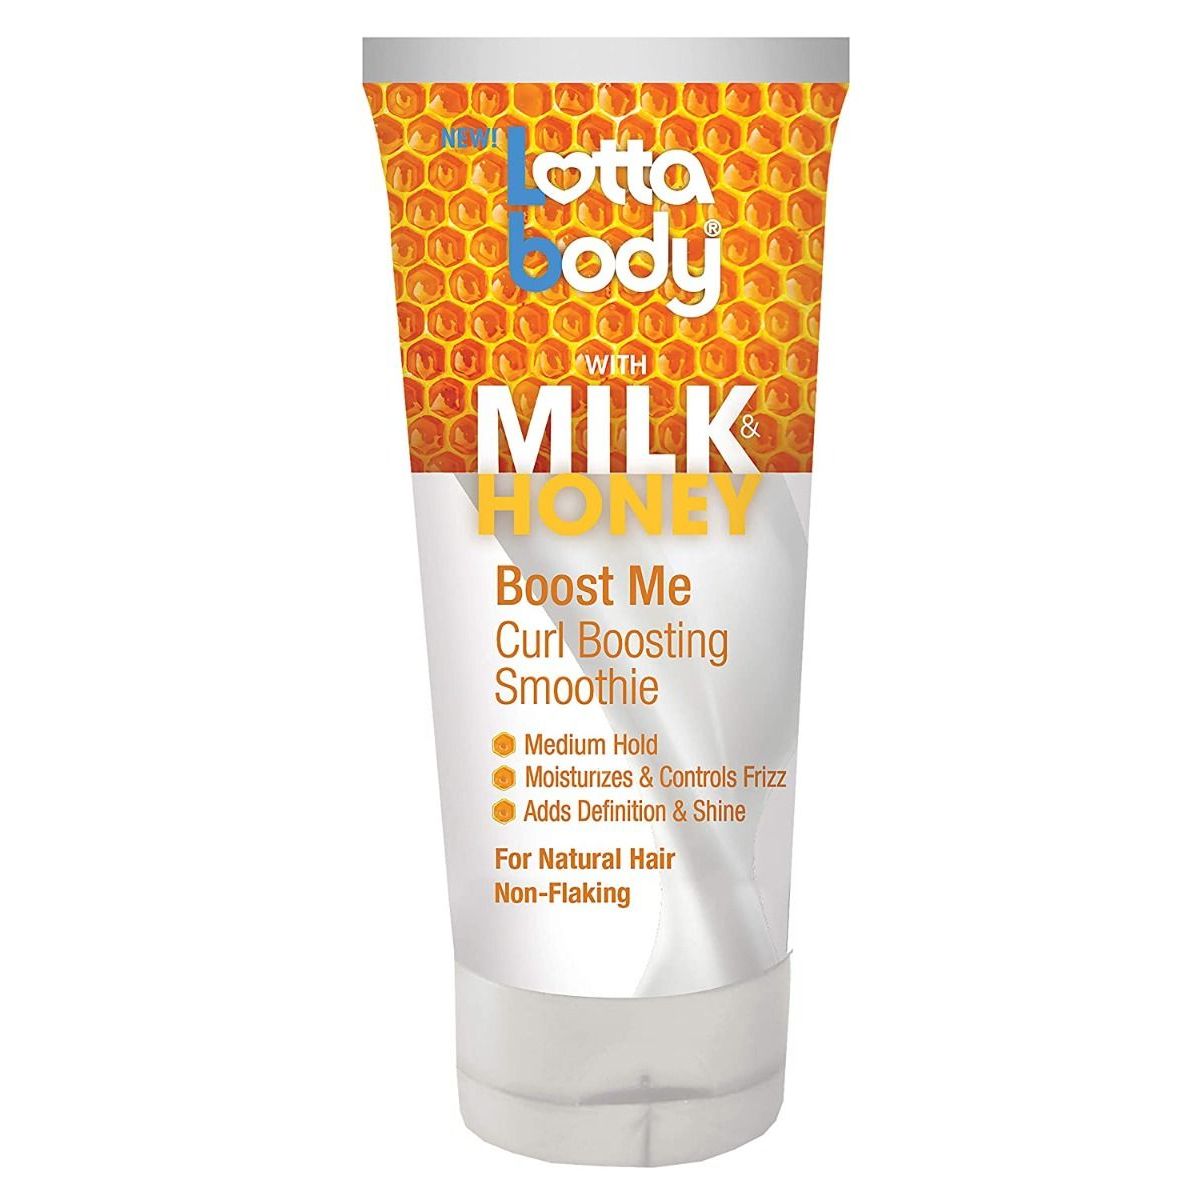 Lottabody Milk & Honey Boost Me Curl Boosting Smoothie 5,1 oz 